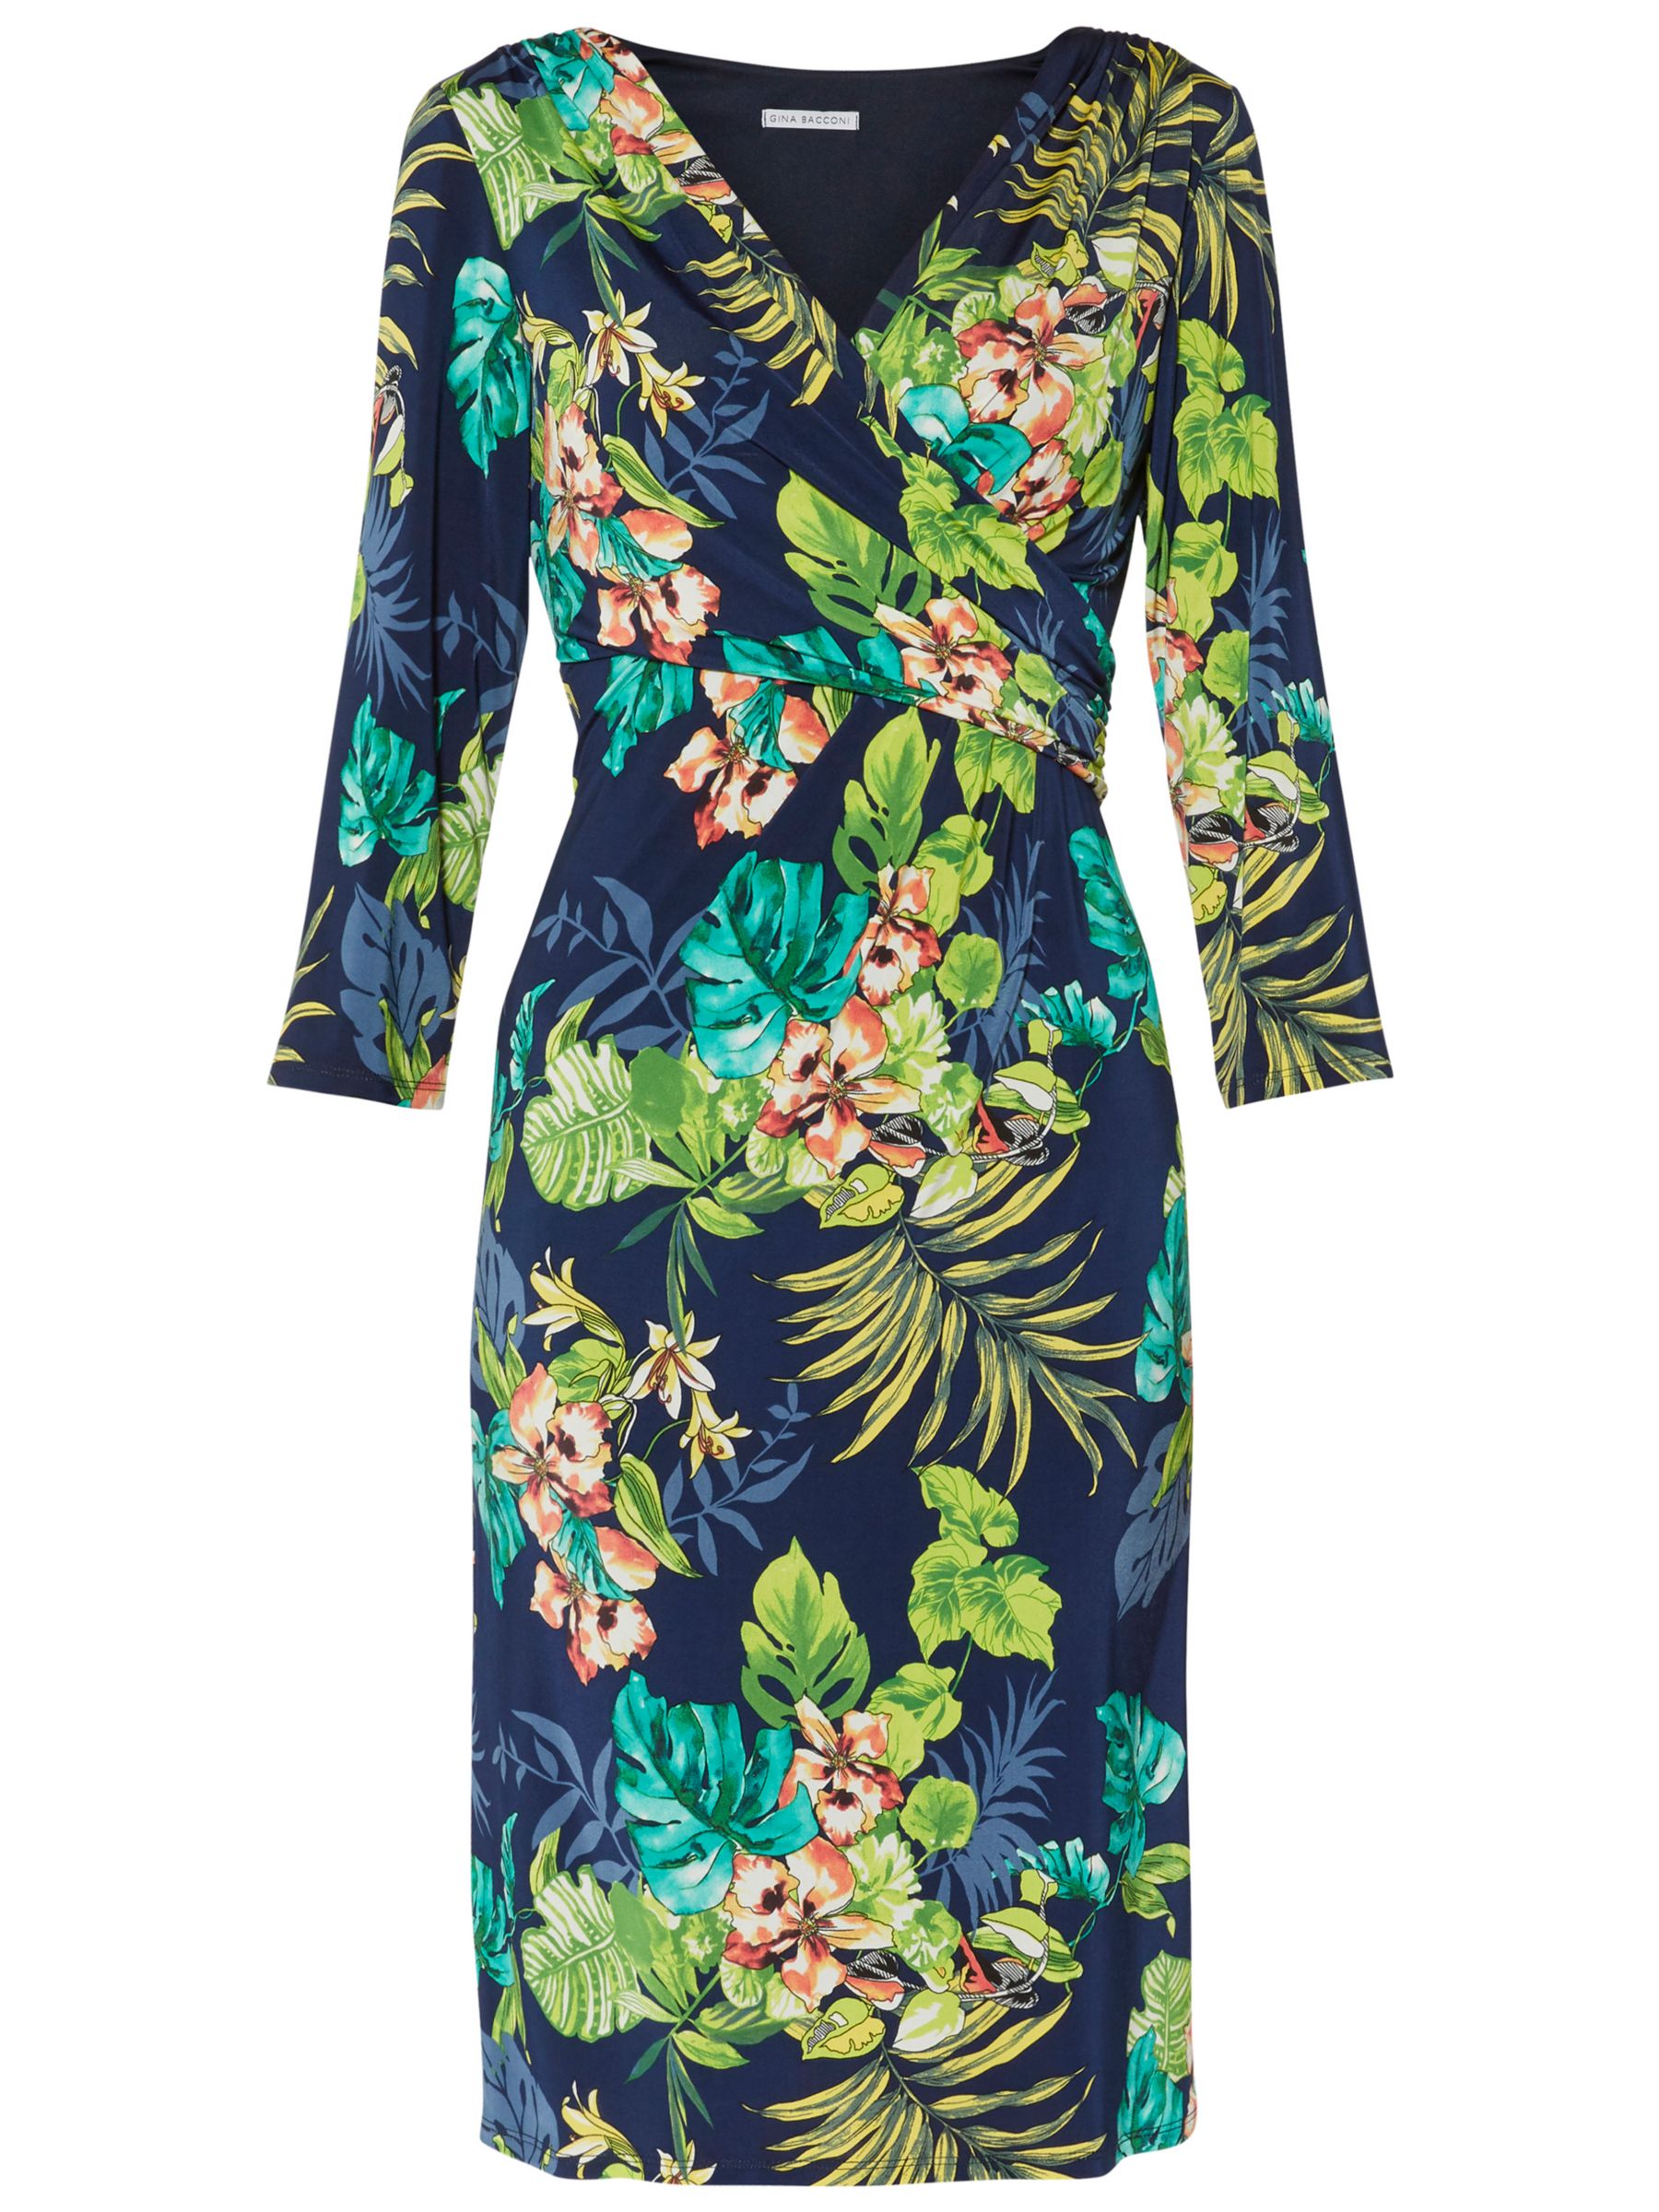 Gina Bacconi Latika Jungle Floral Dress, Navy at John Lewis & Partners